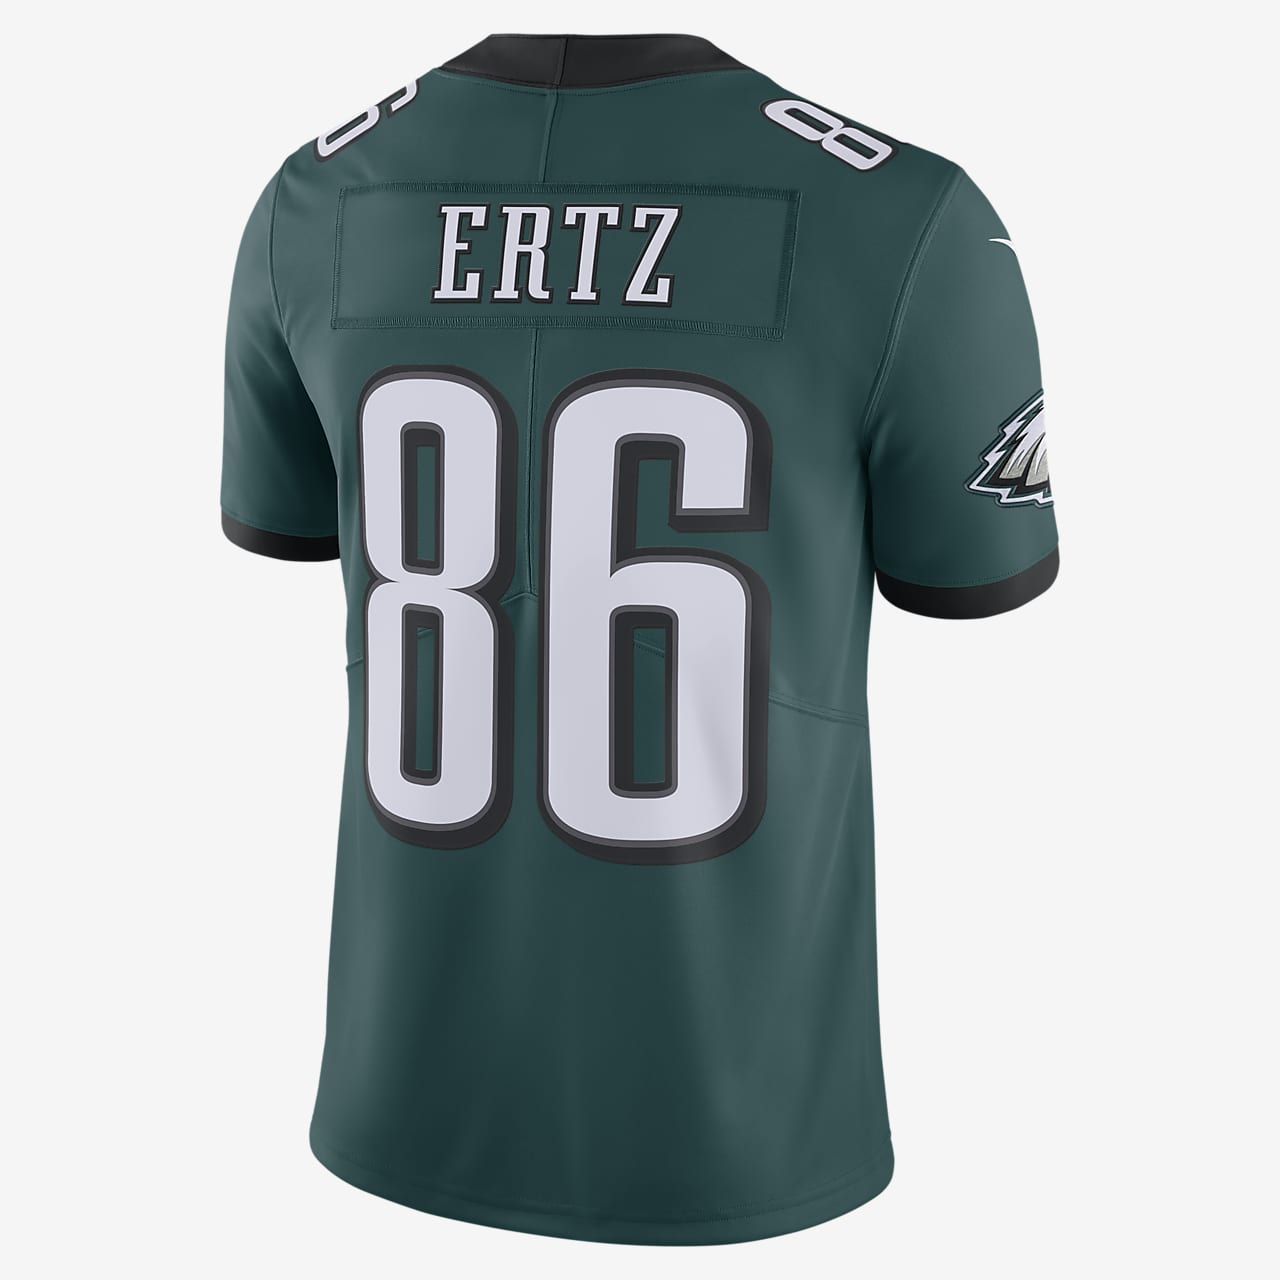 NFL Philadelphia Eagles Vapor Untouchable (Zach Ertz) Men's Limited Football Jersey